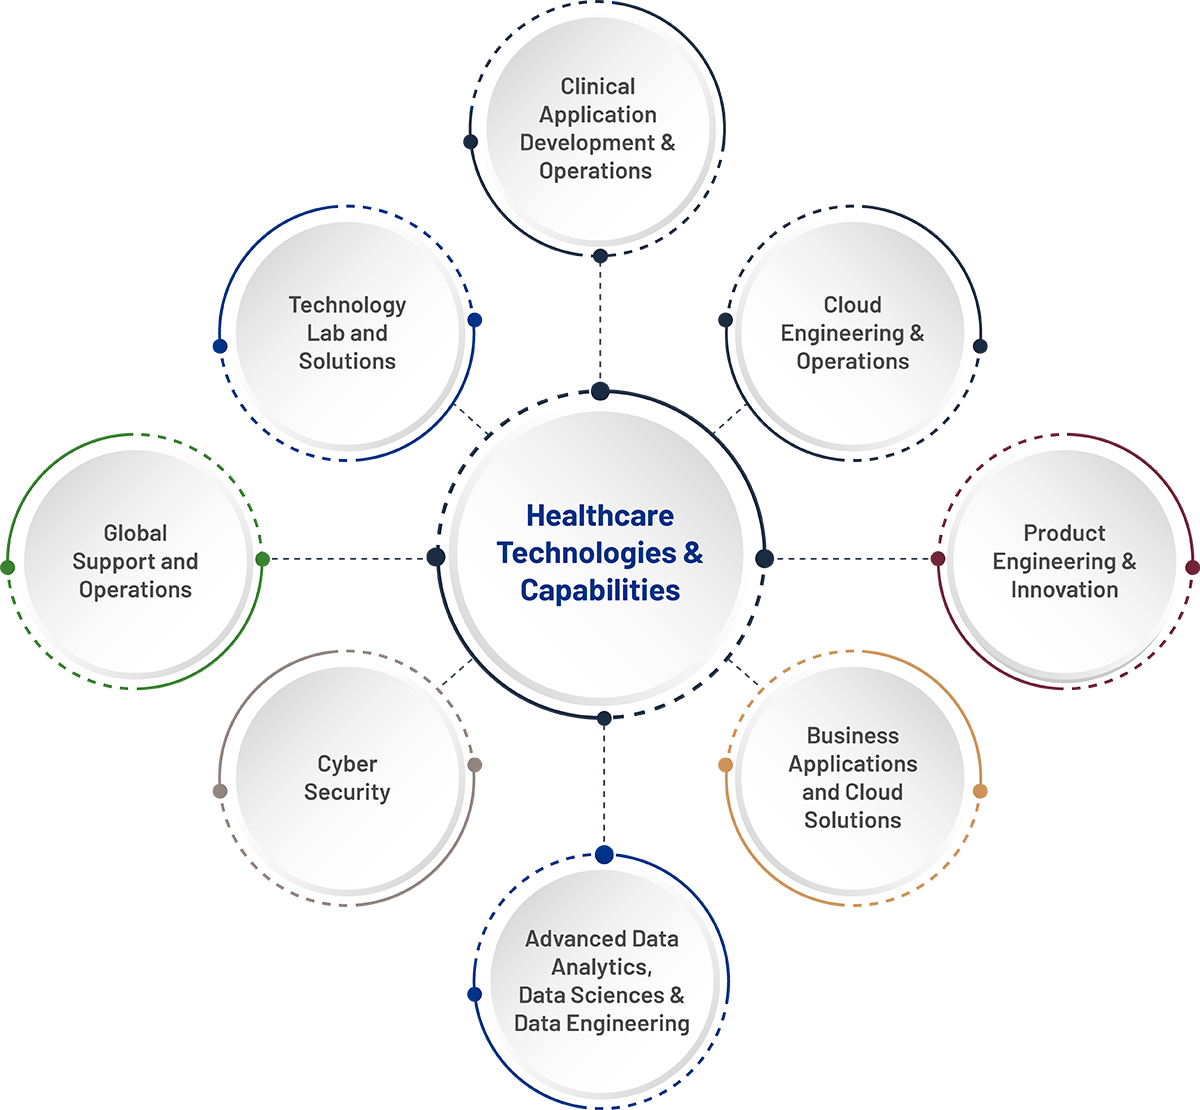 Healthcare technologies & capabilities